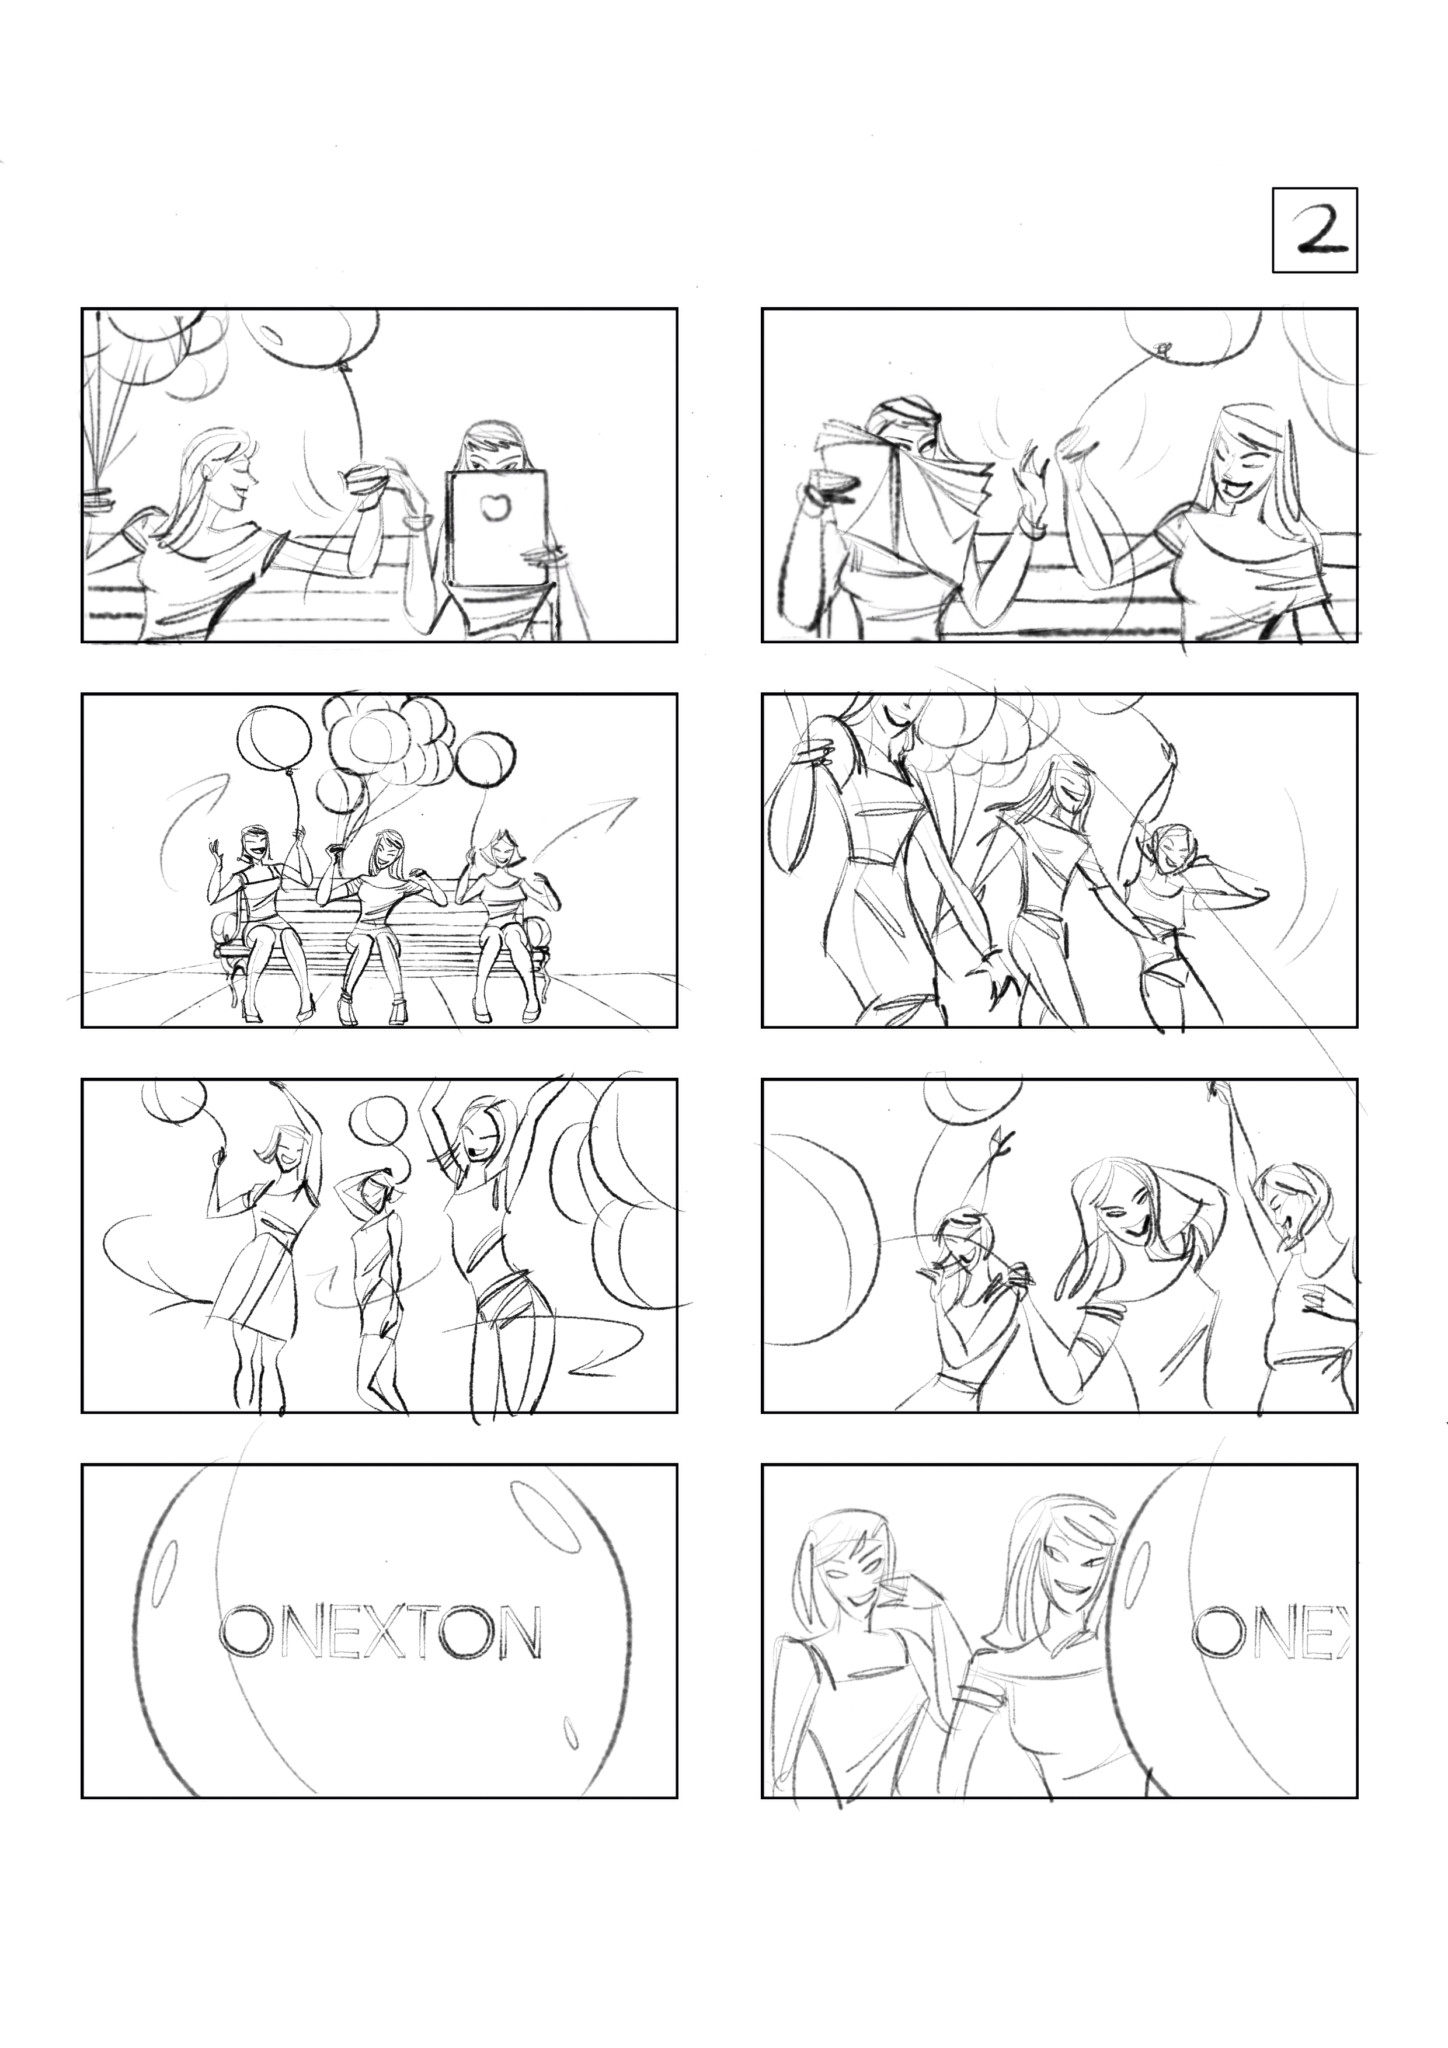 2D Onexton Advertisement Storyboard Illustration